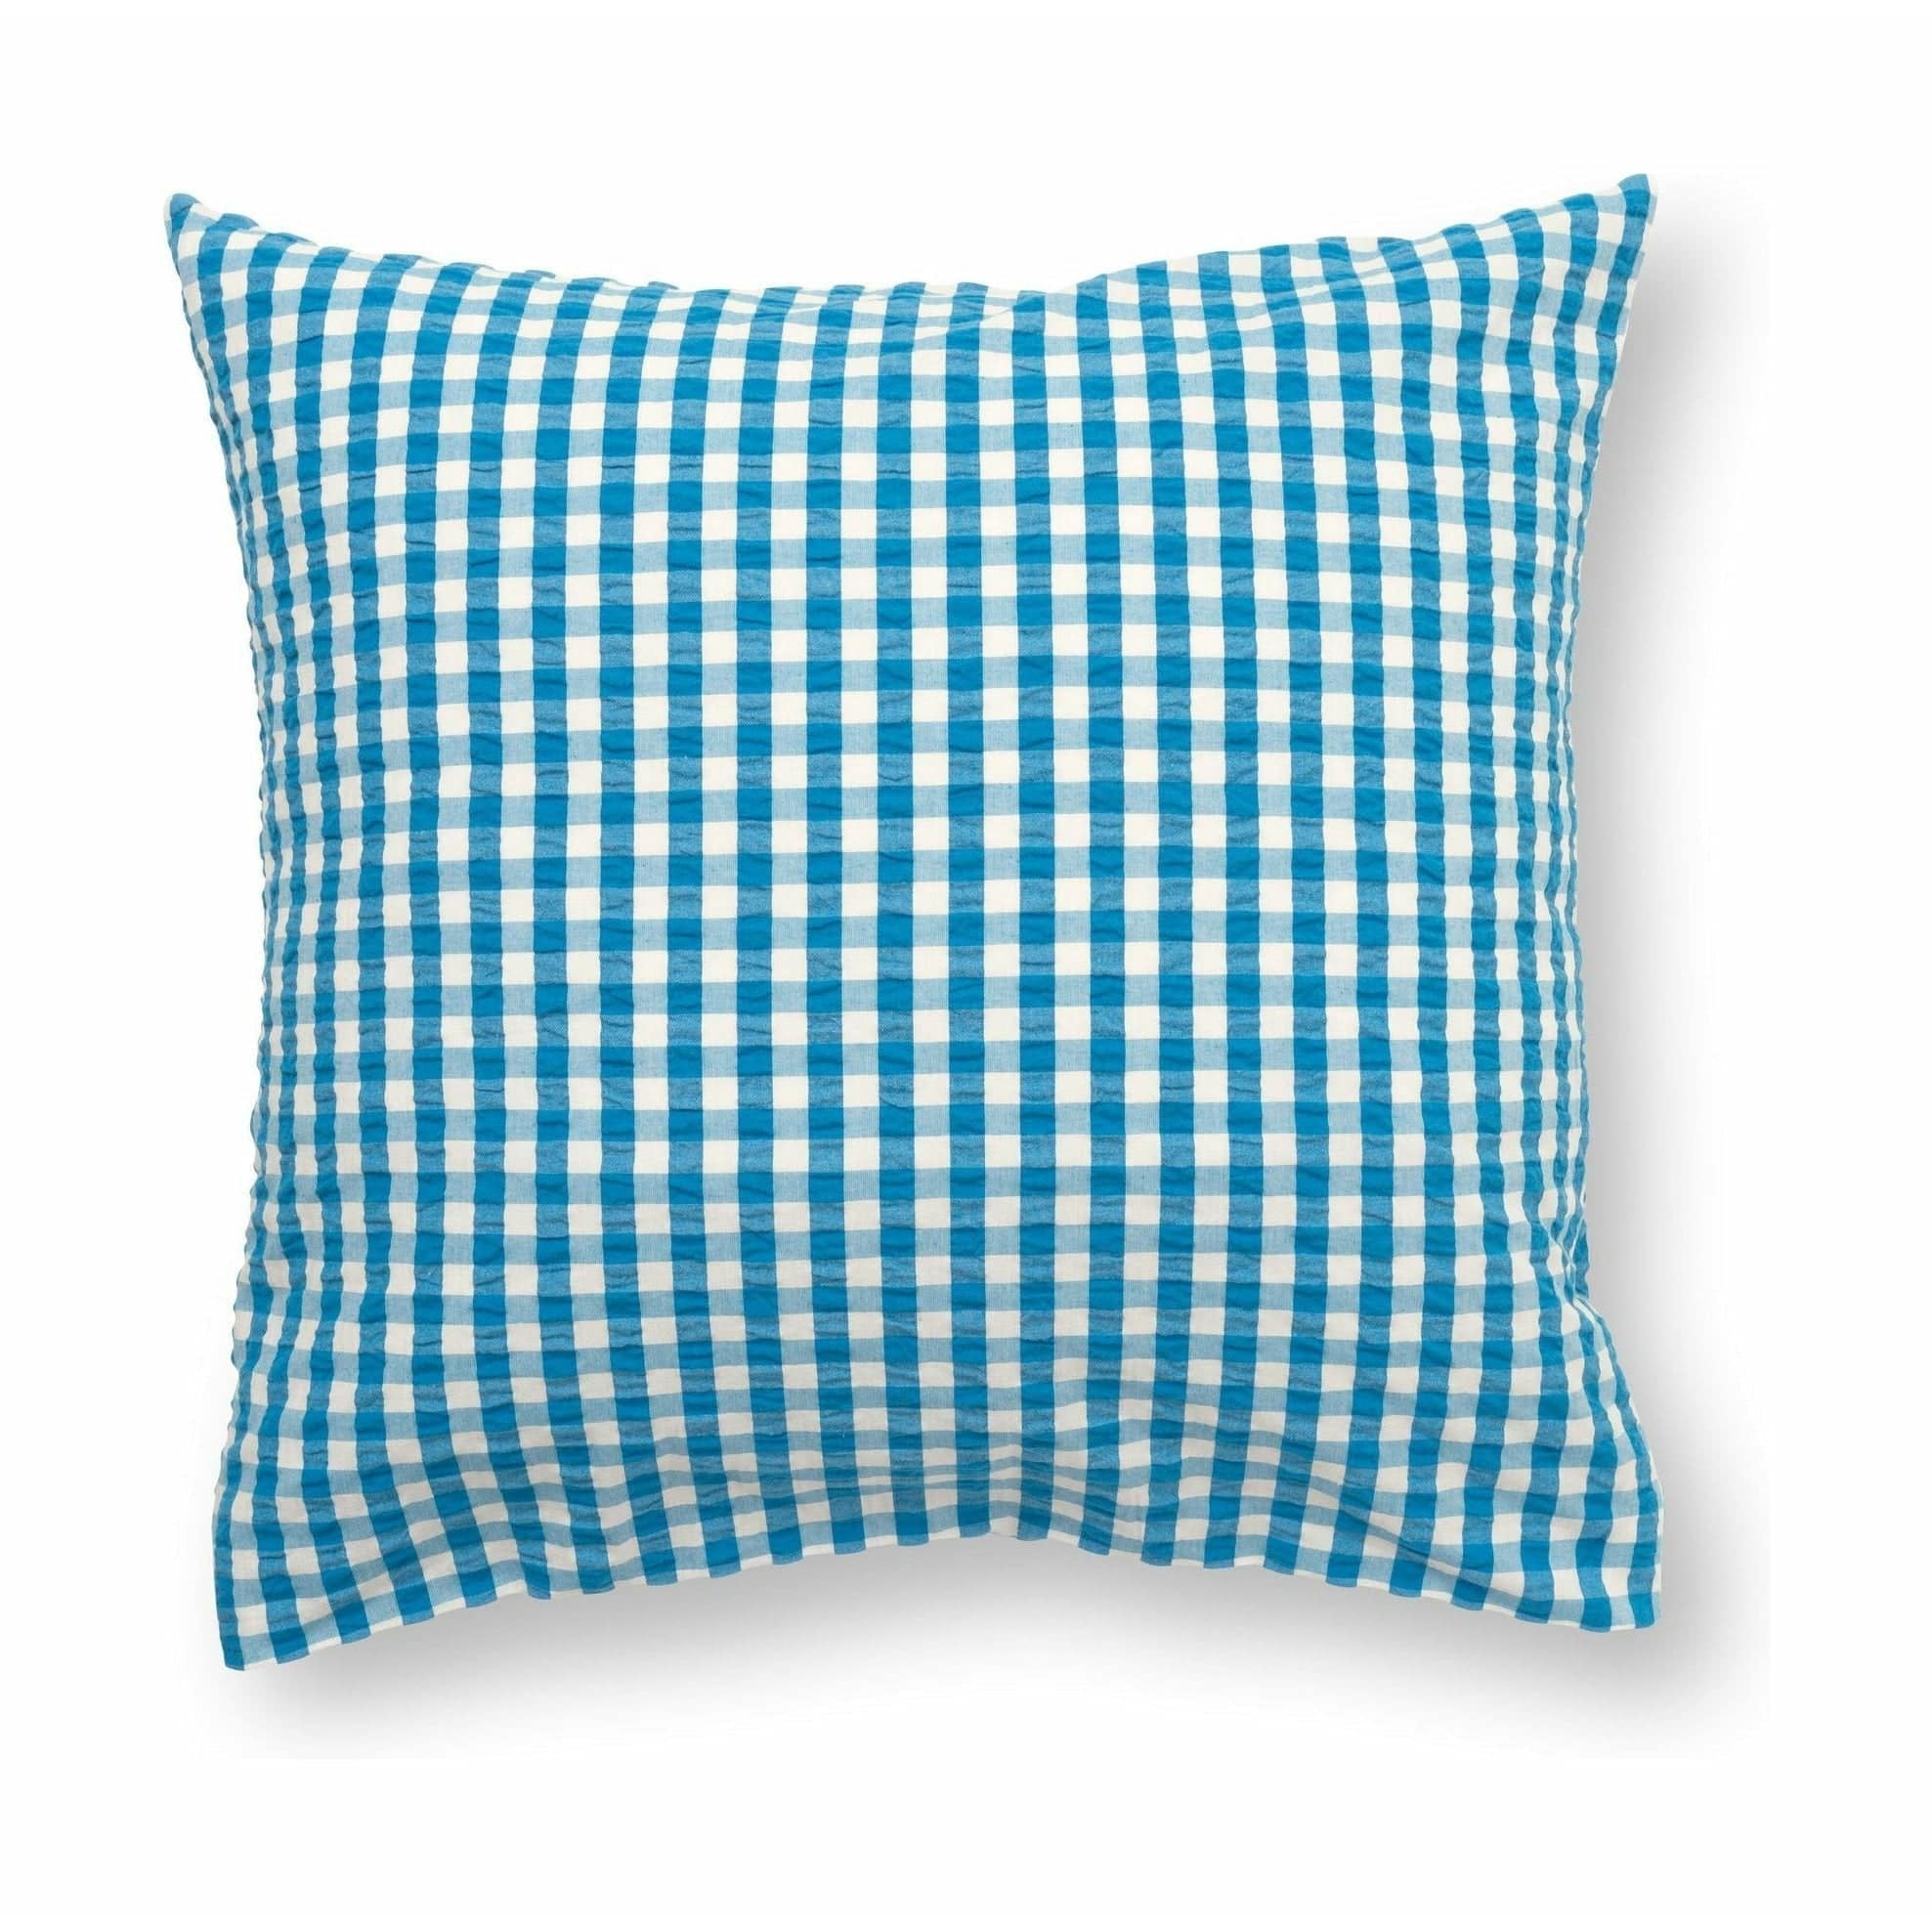 Juna Bæk & Bølge Pillowcase 63x60 cm, niebieski/brzozowy